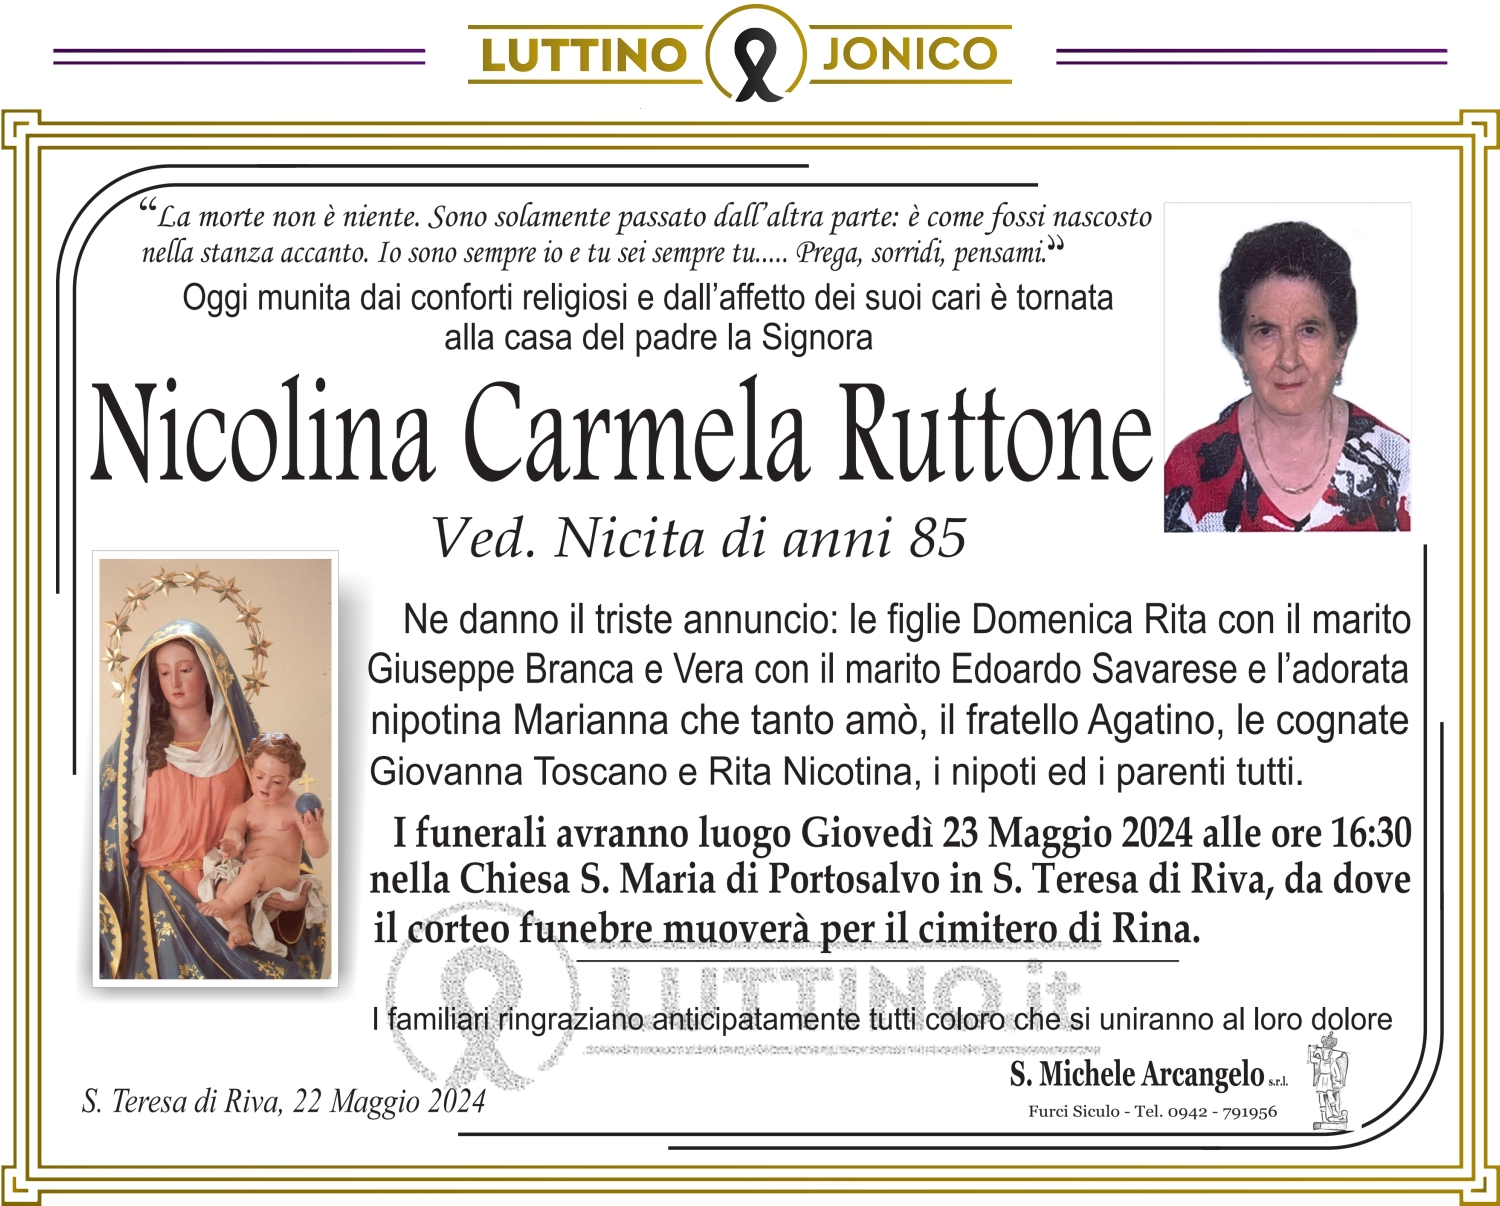 Nicolina Carmela Ruttone